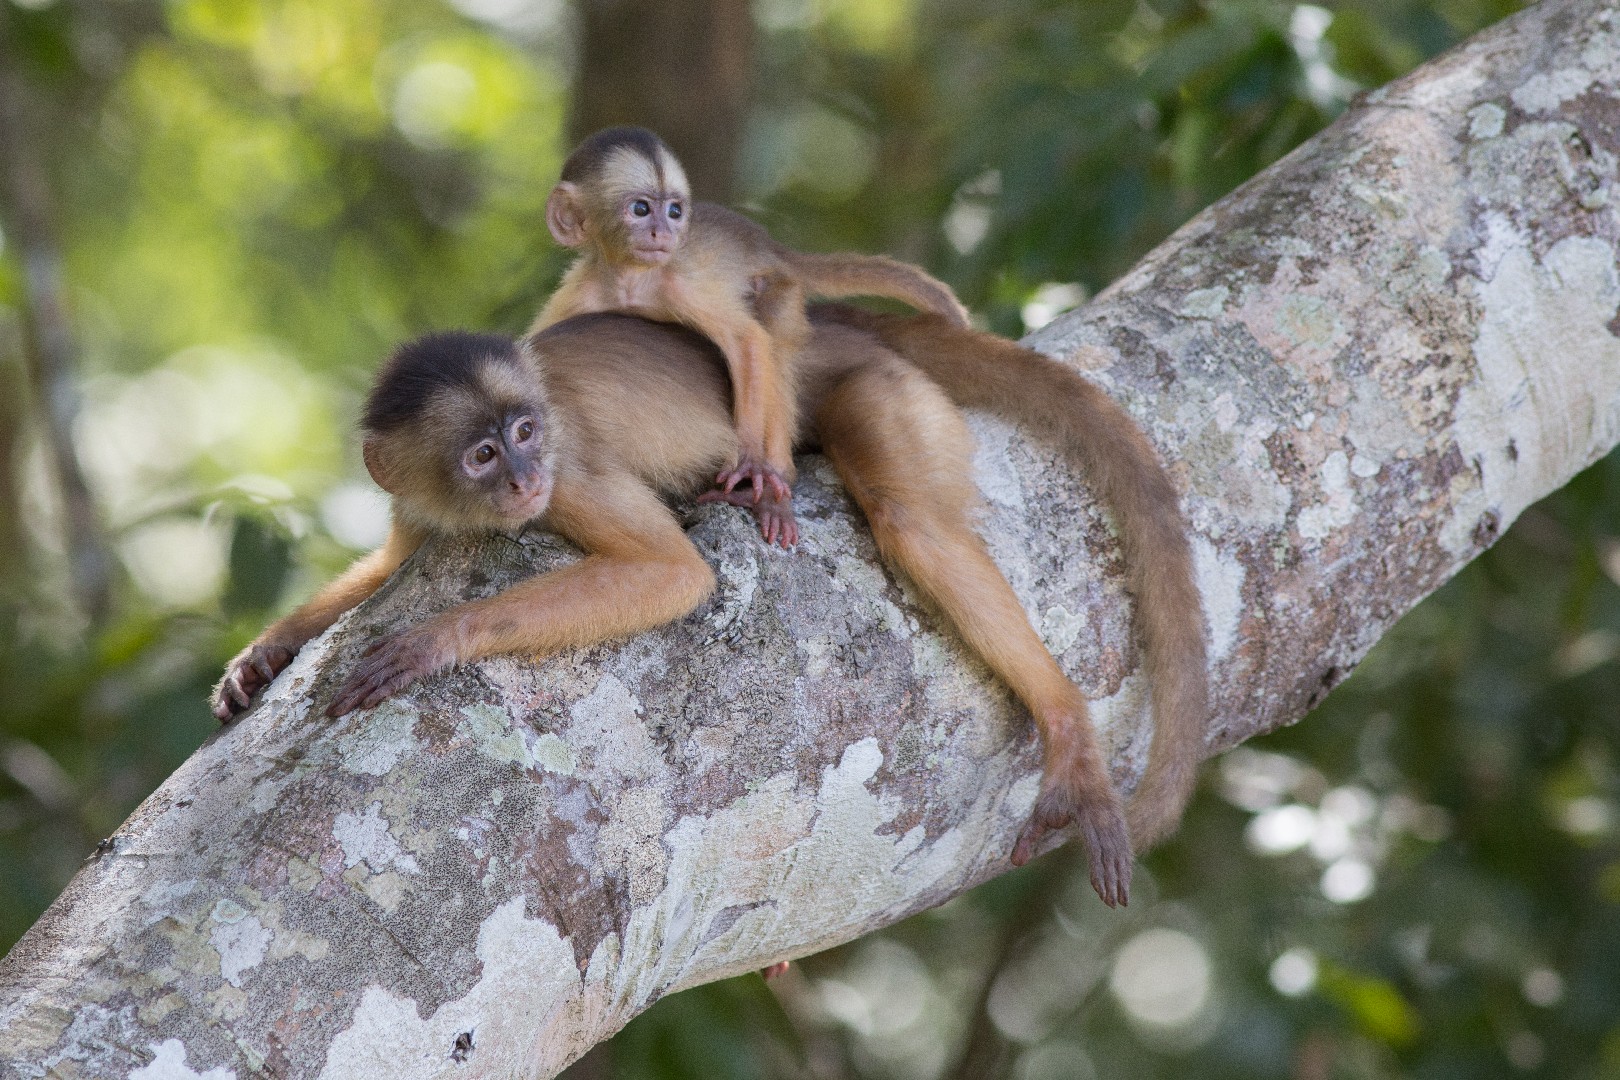 Gracile capuchin monkeys (Cebus)